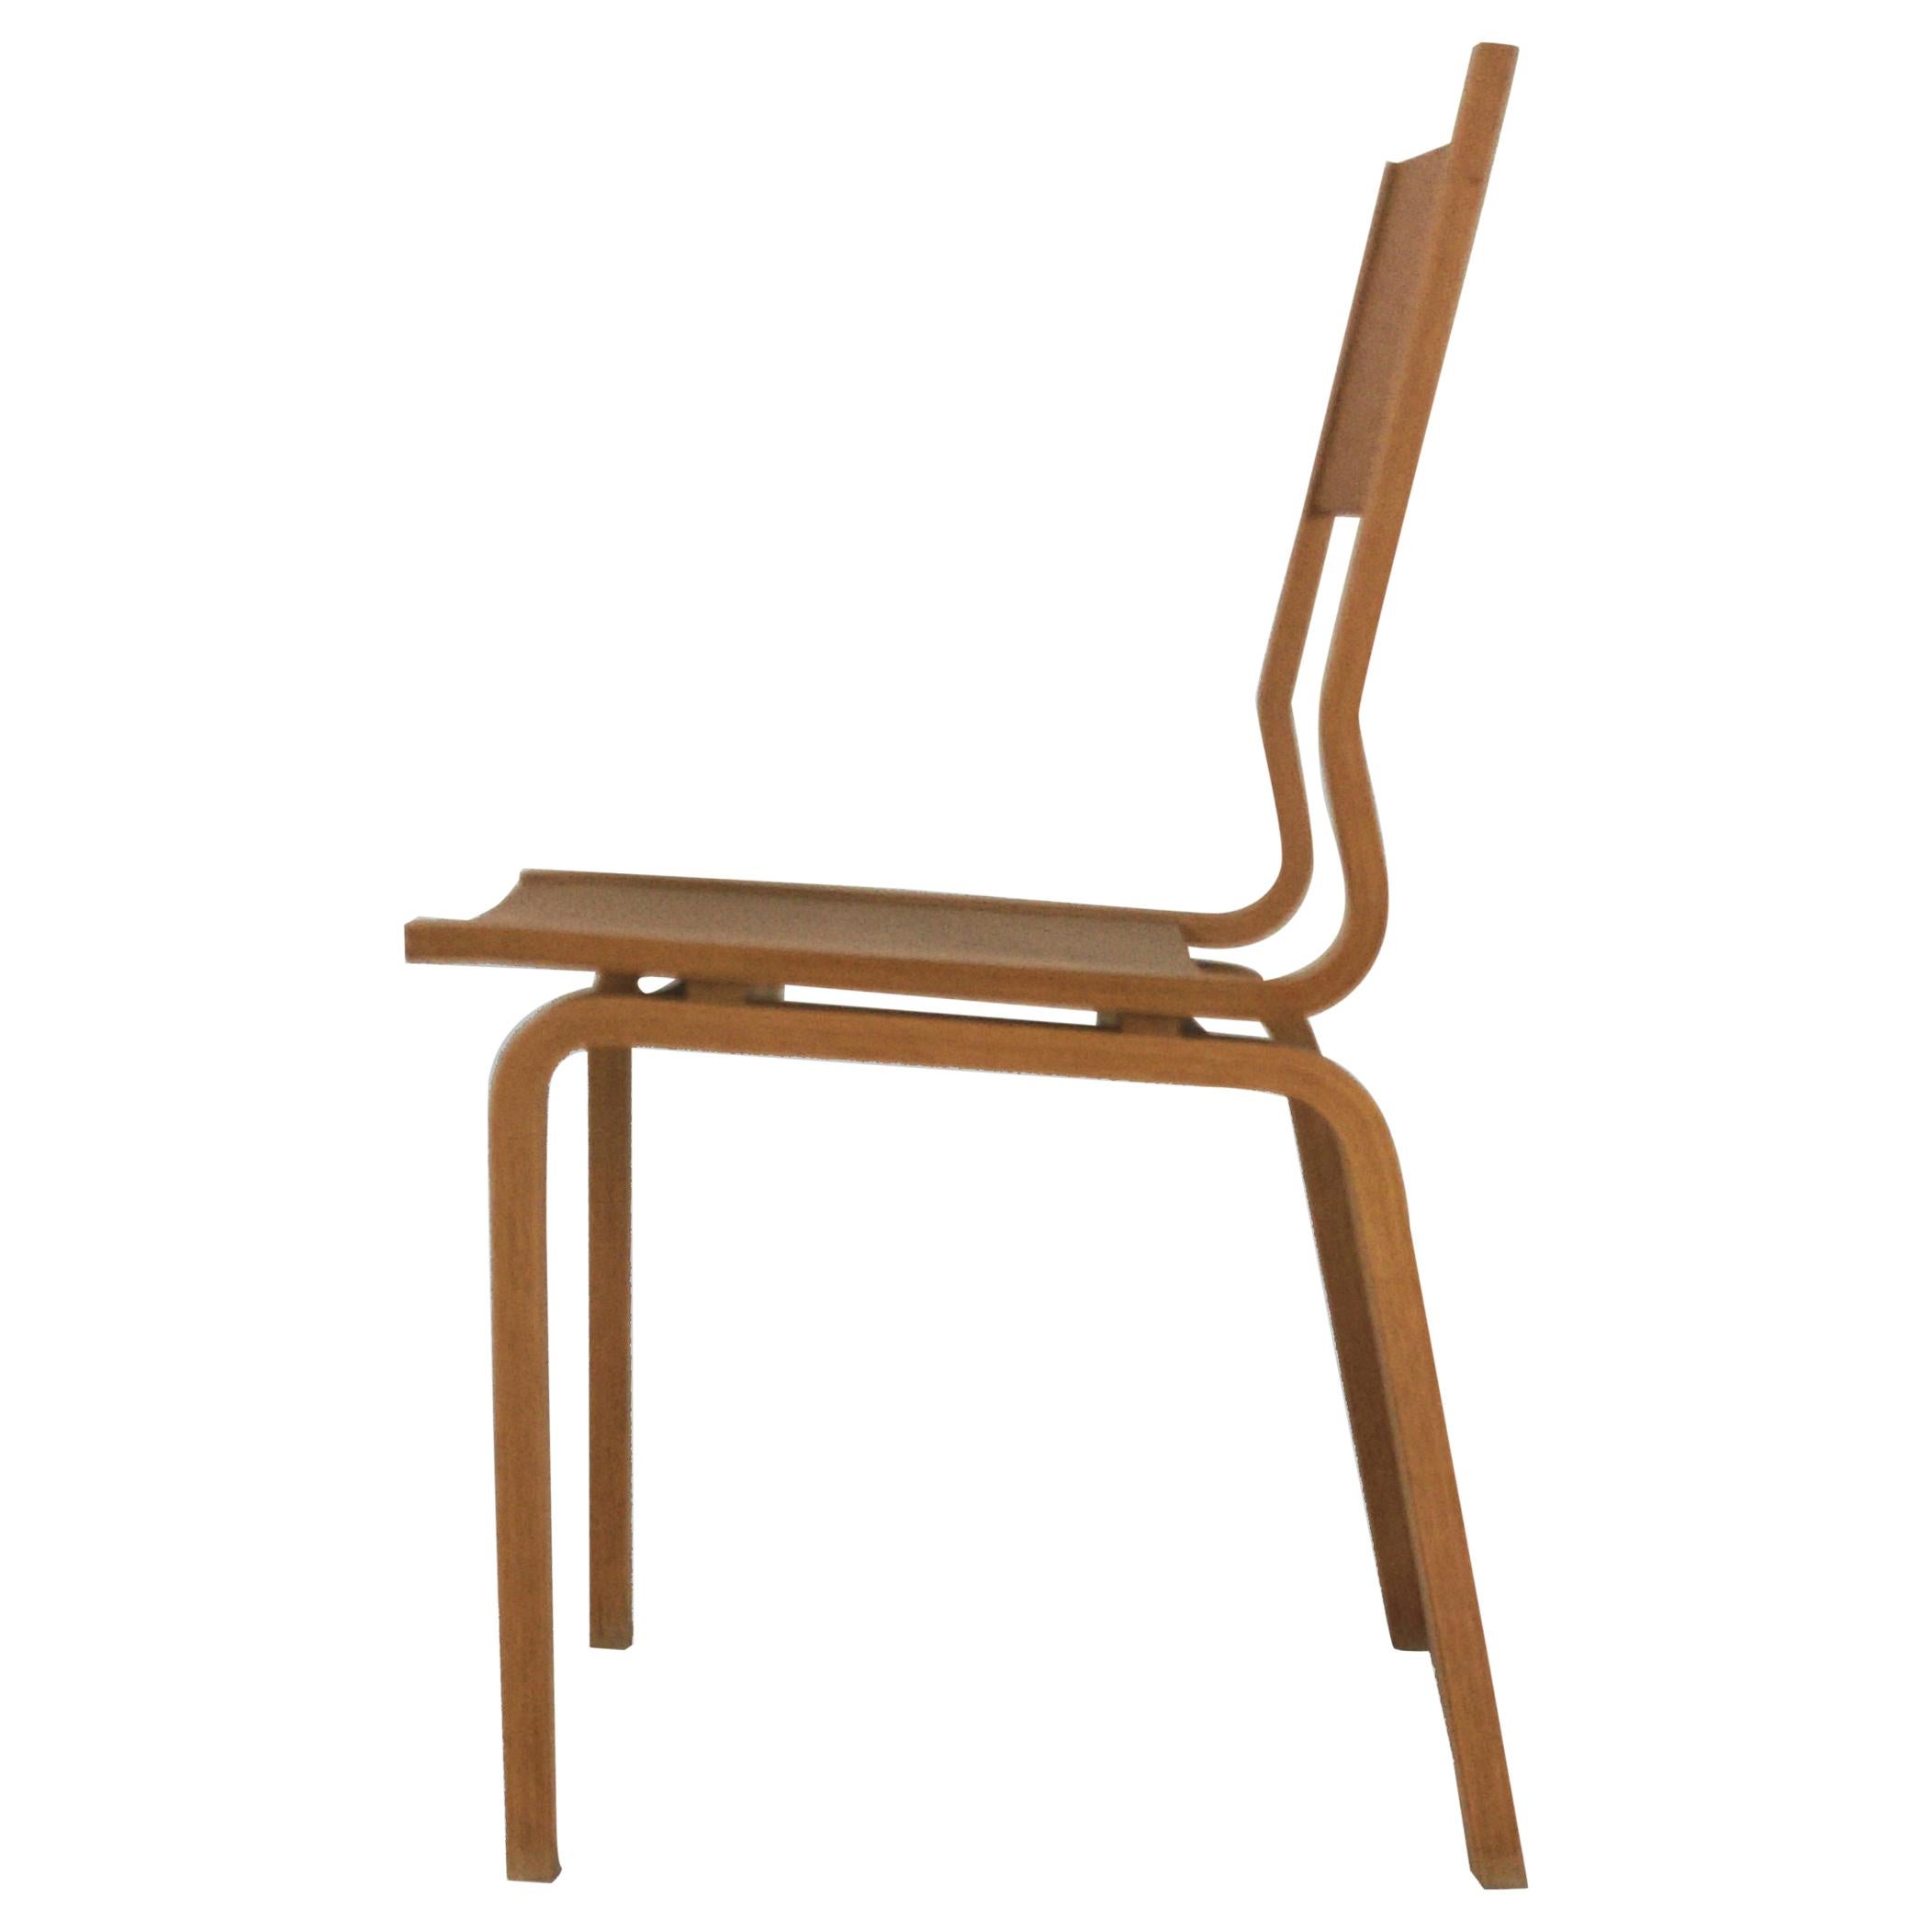 1965 Arne Jacobsen Saint Catherines Chair in Laminated Oak by Fritz Hansen